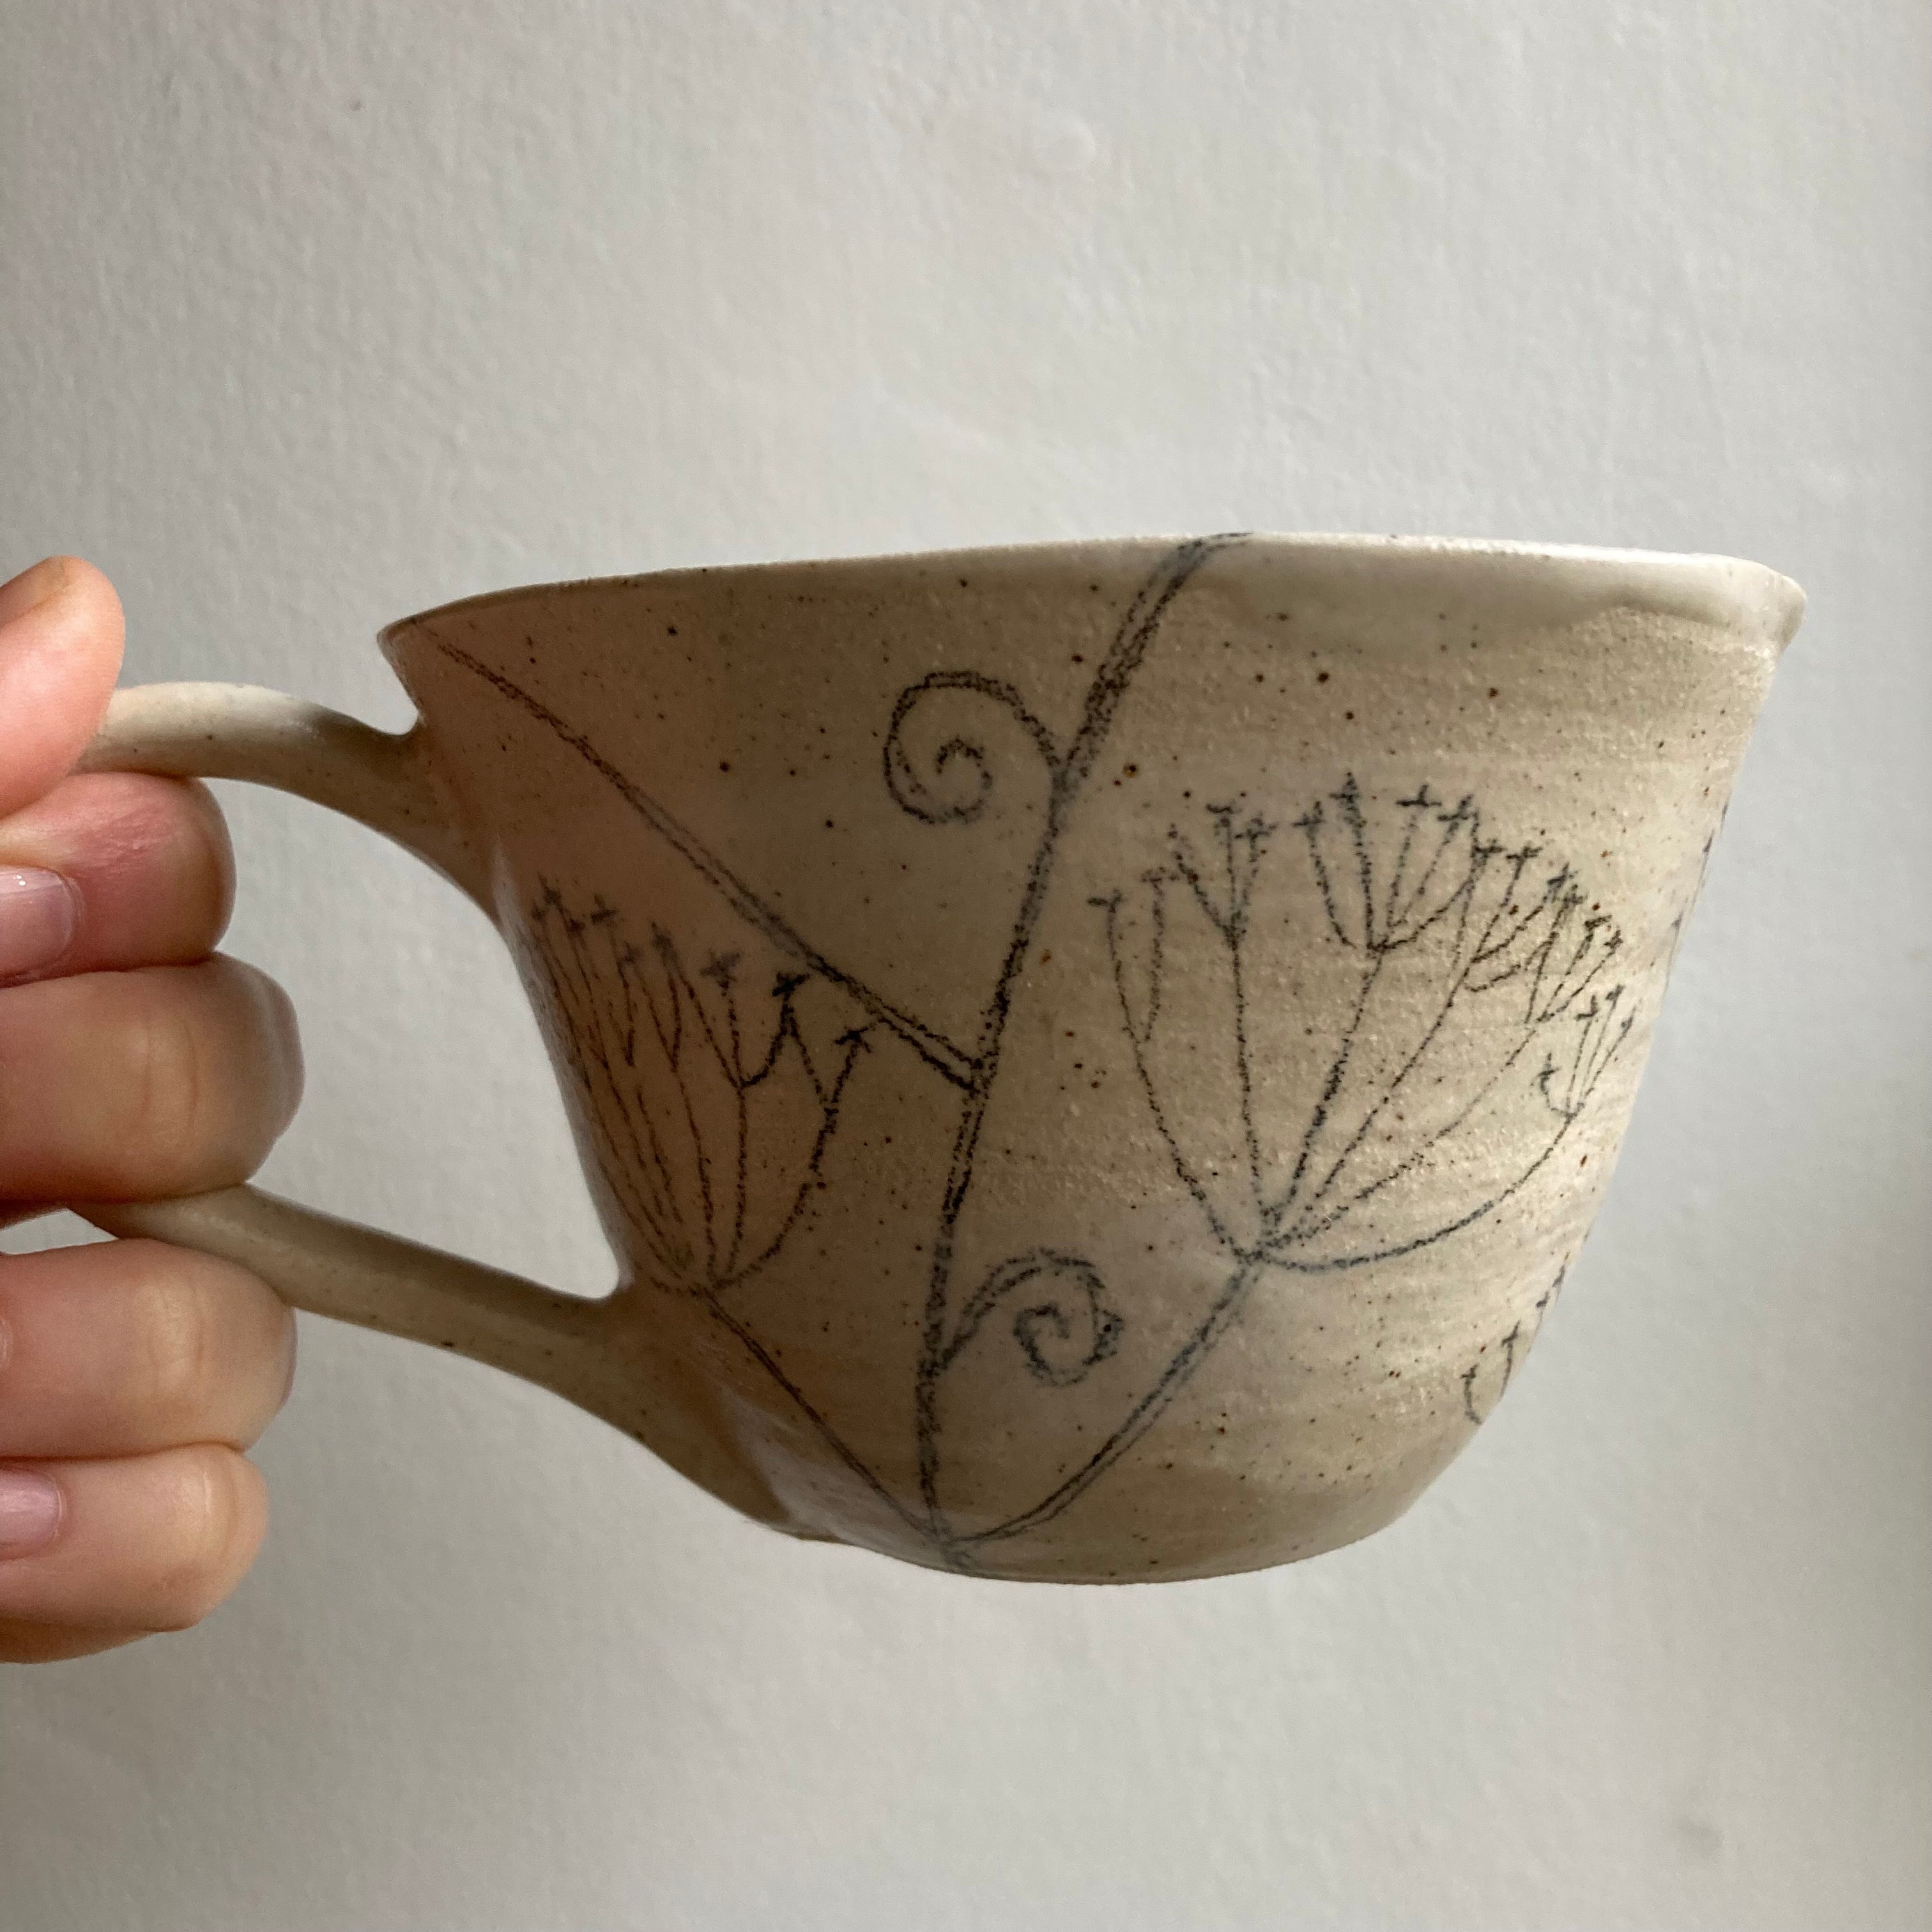 Wobble mug with cow parsley sketch